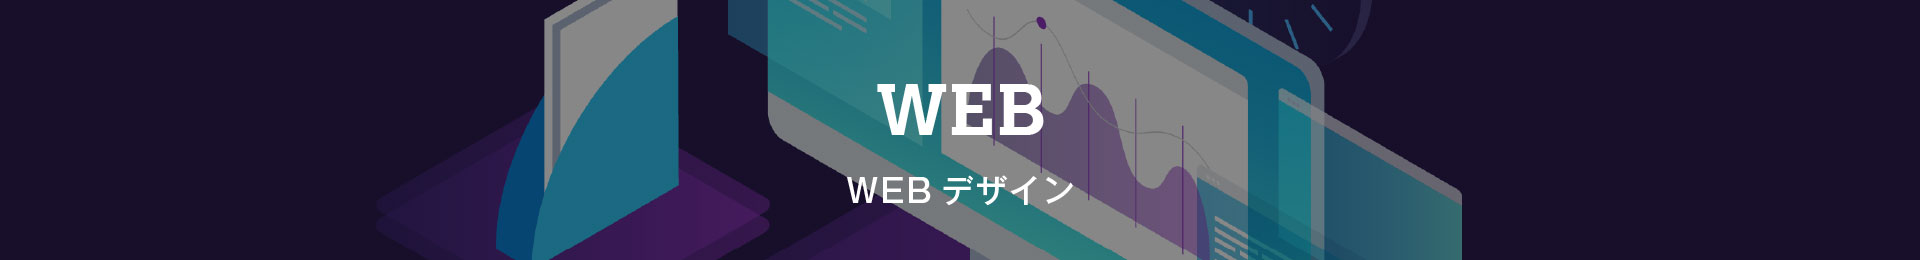 WEB ウェブデザイン